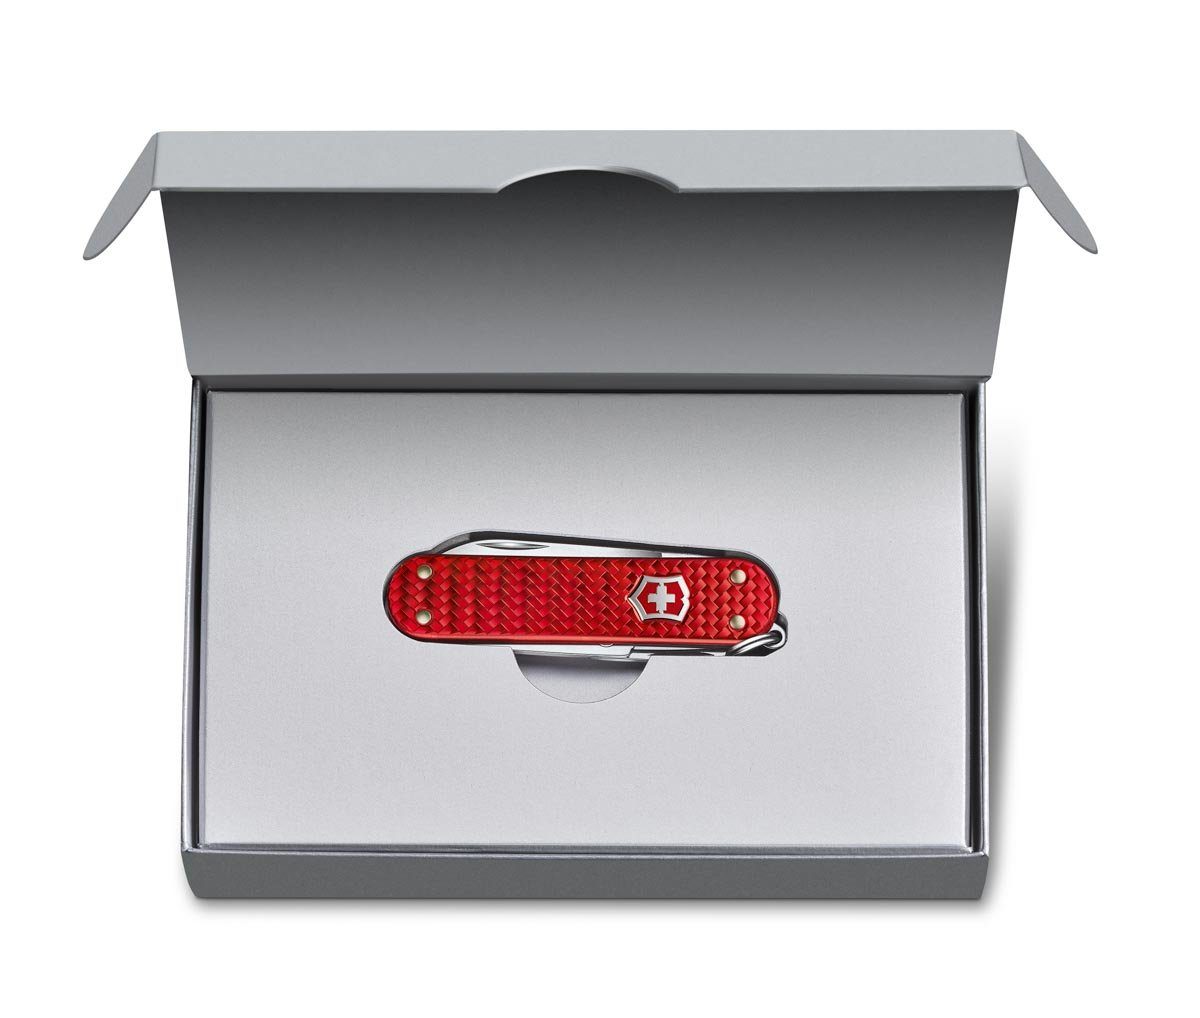 Victorinox Precious Taschenmesser SD Alox, Red Classic Iconic